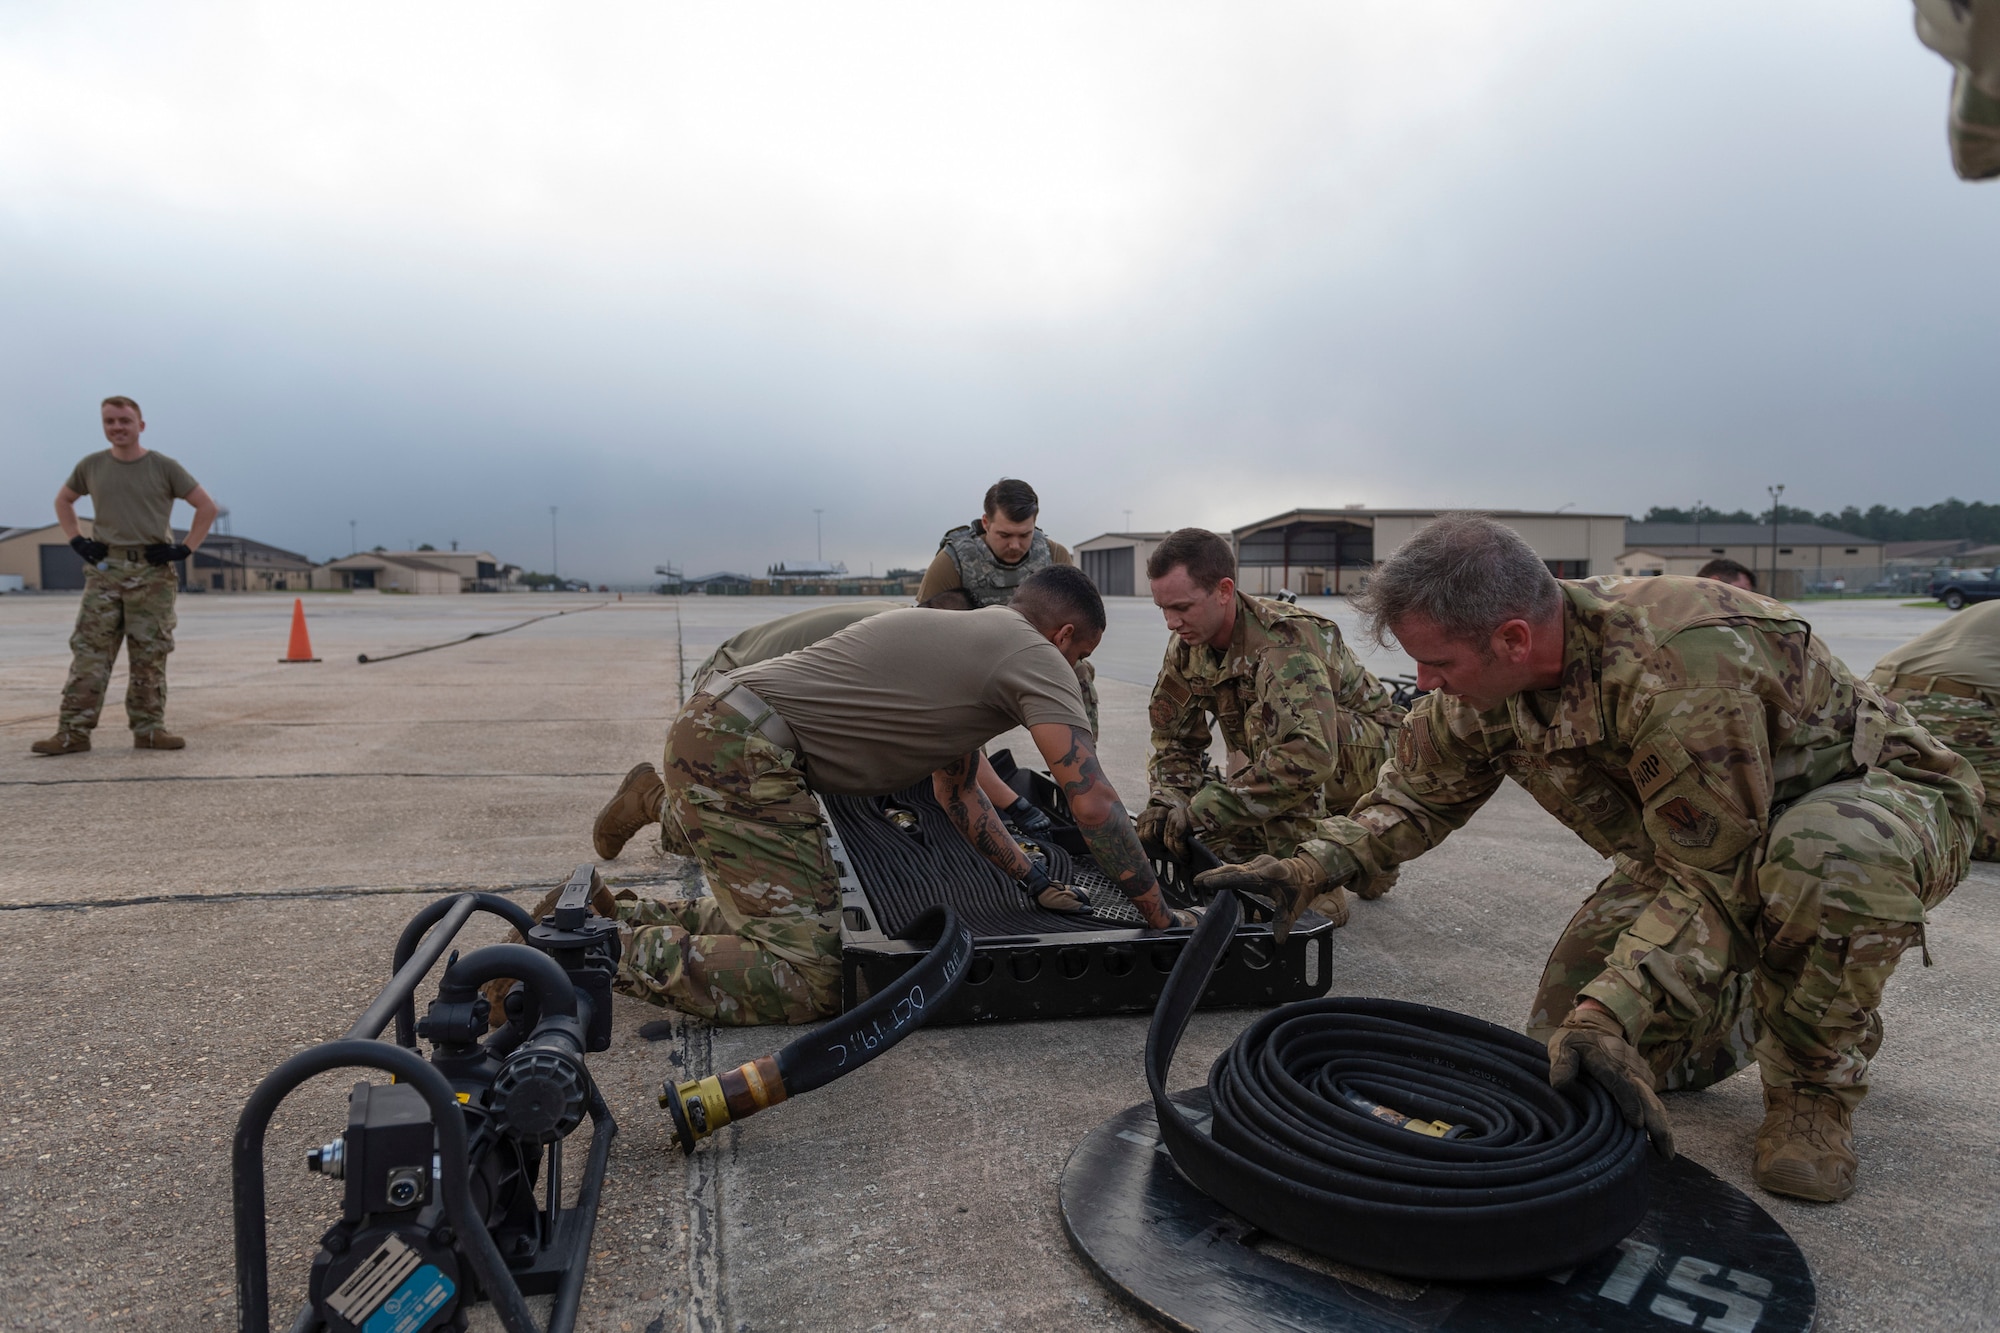 A photo of airmen unraveling a fuel hose into a basket.